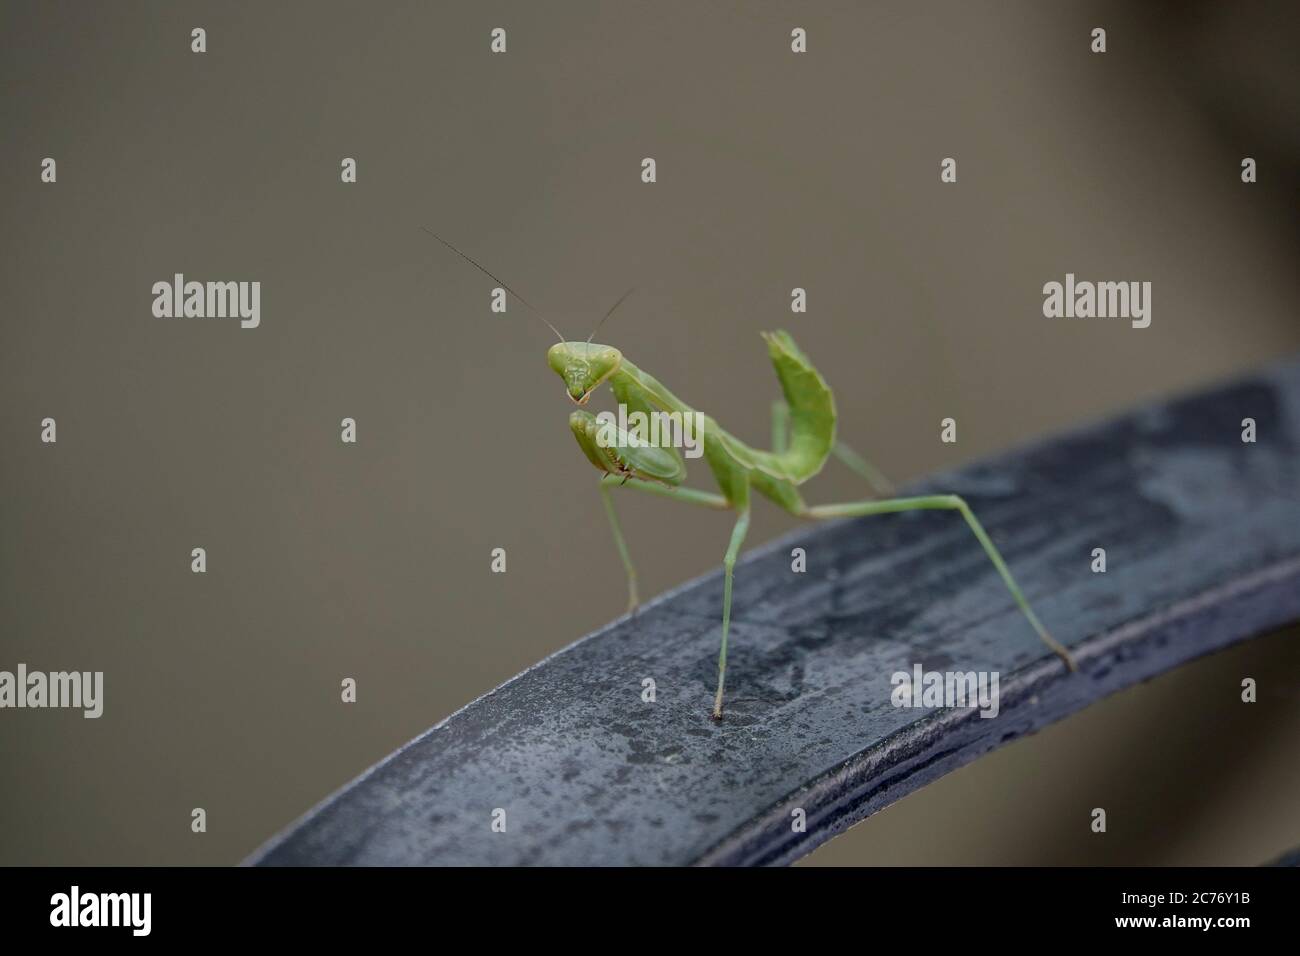 A close up of a praying mantis. Stock Photo